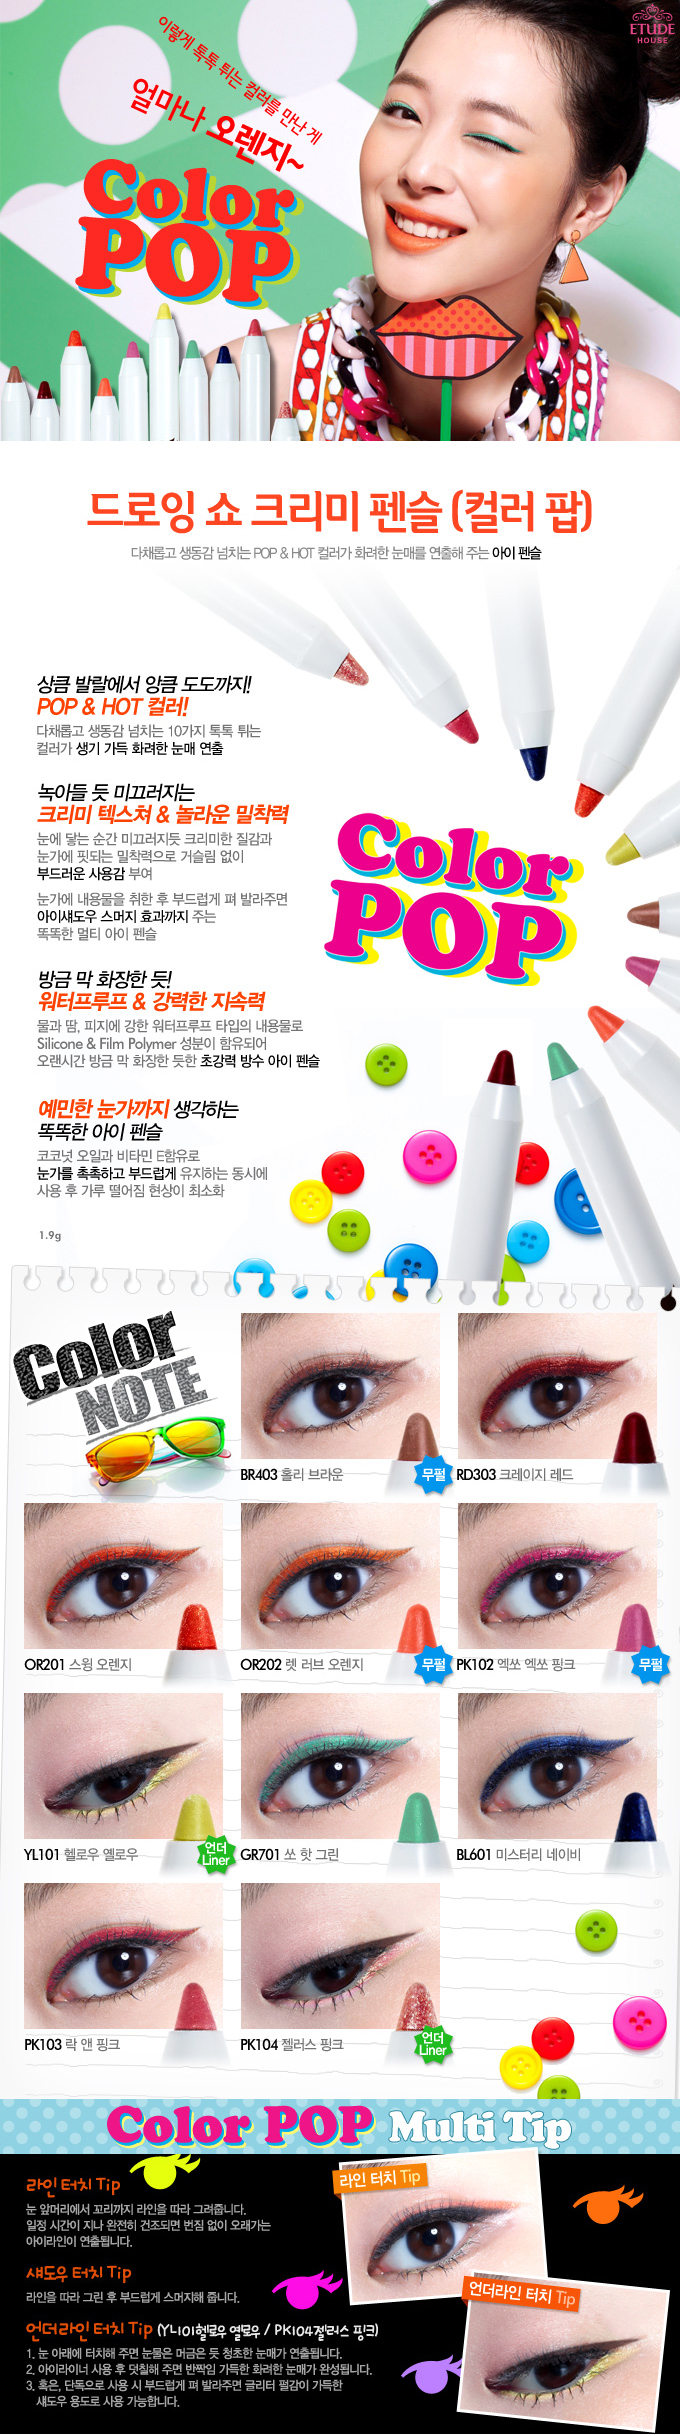 ETUDE HOUSE "Color Pop" - Spring / Summer 2013 Collection.